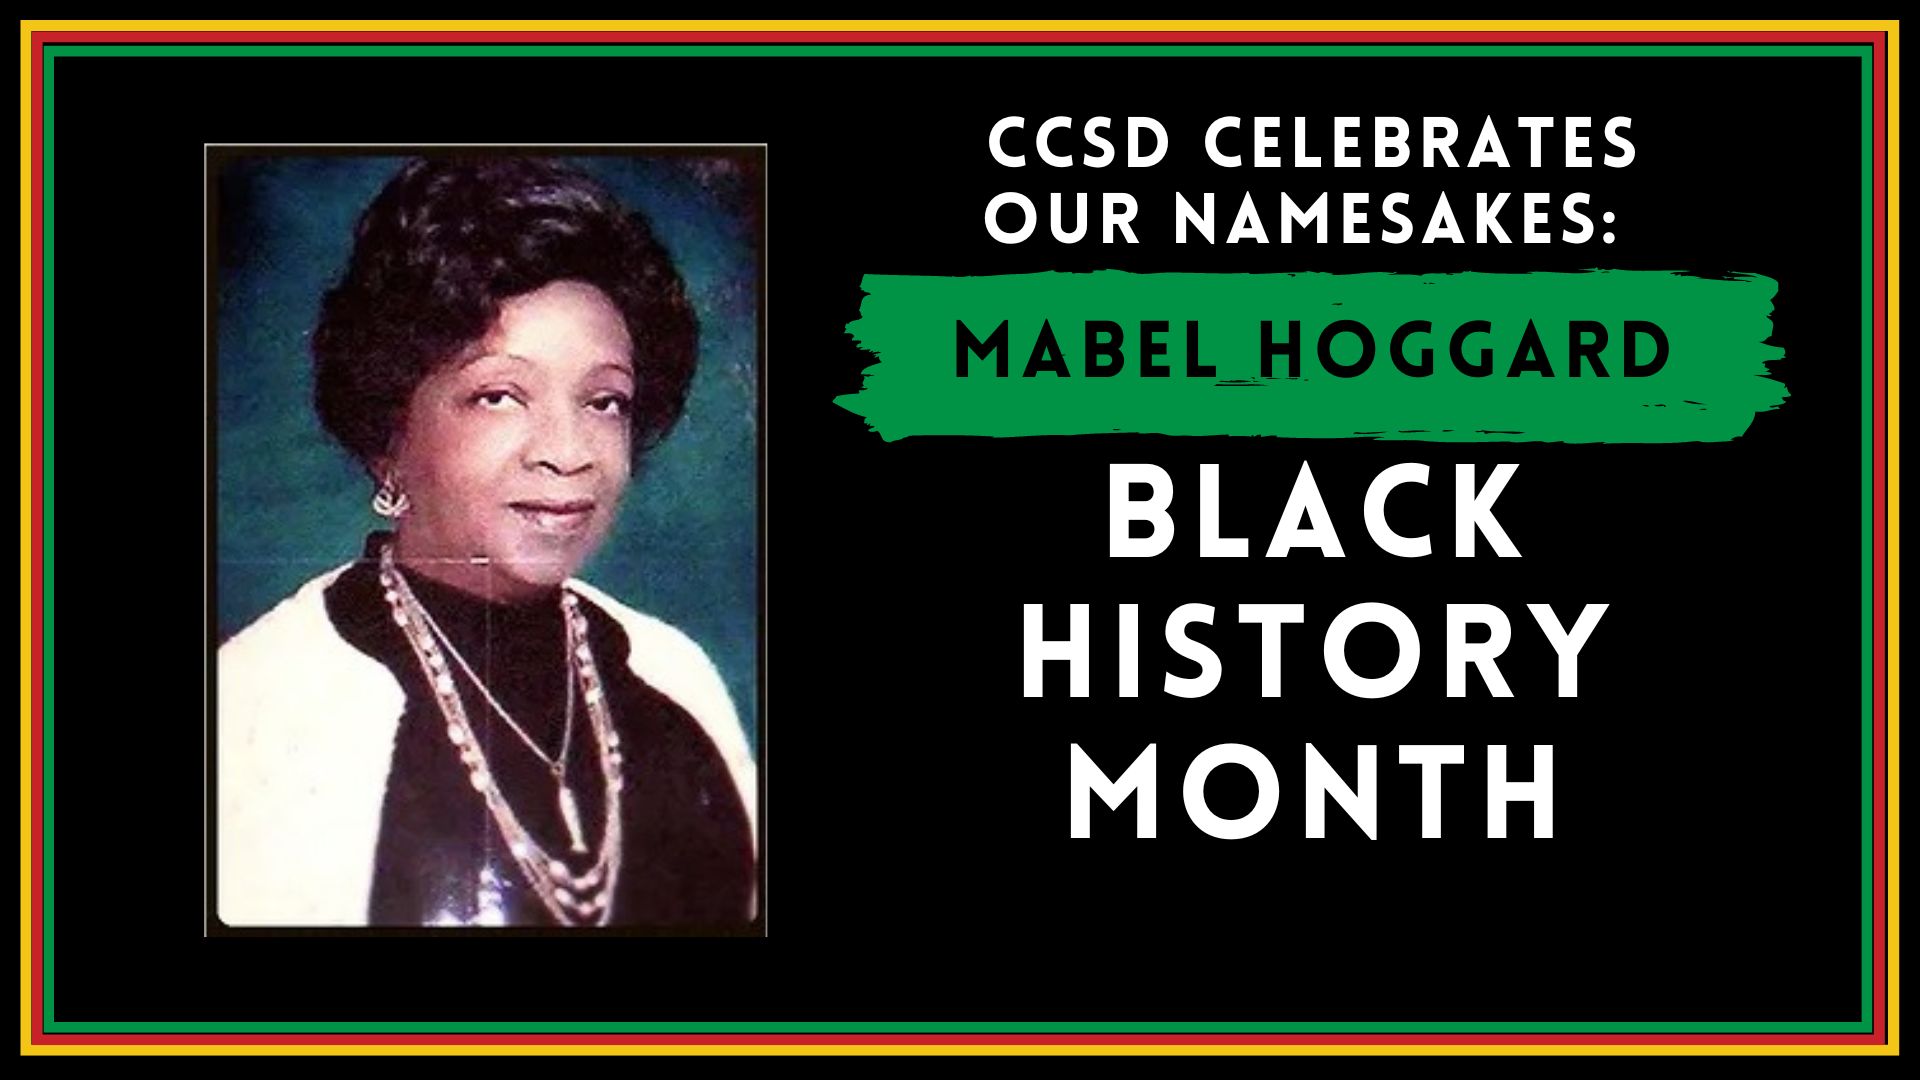 Celebrating CCSD leaders: Mabel Hoggard